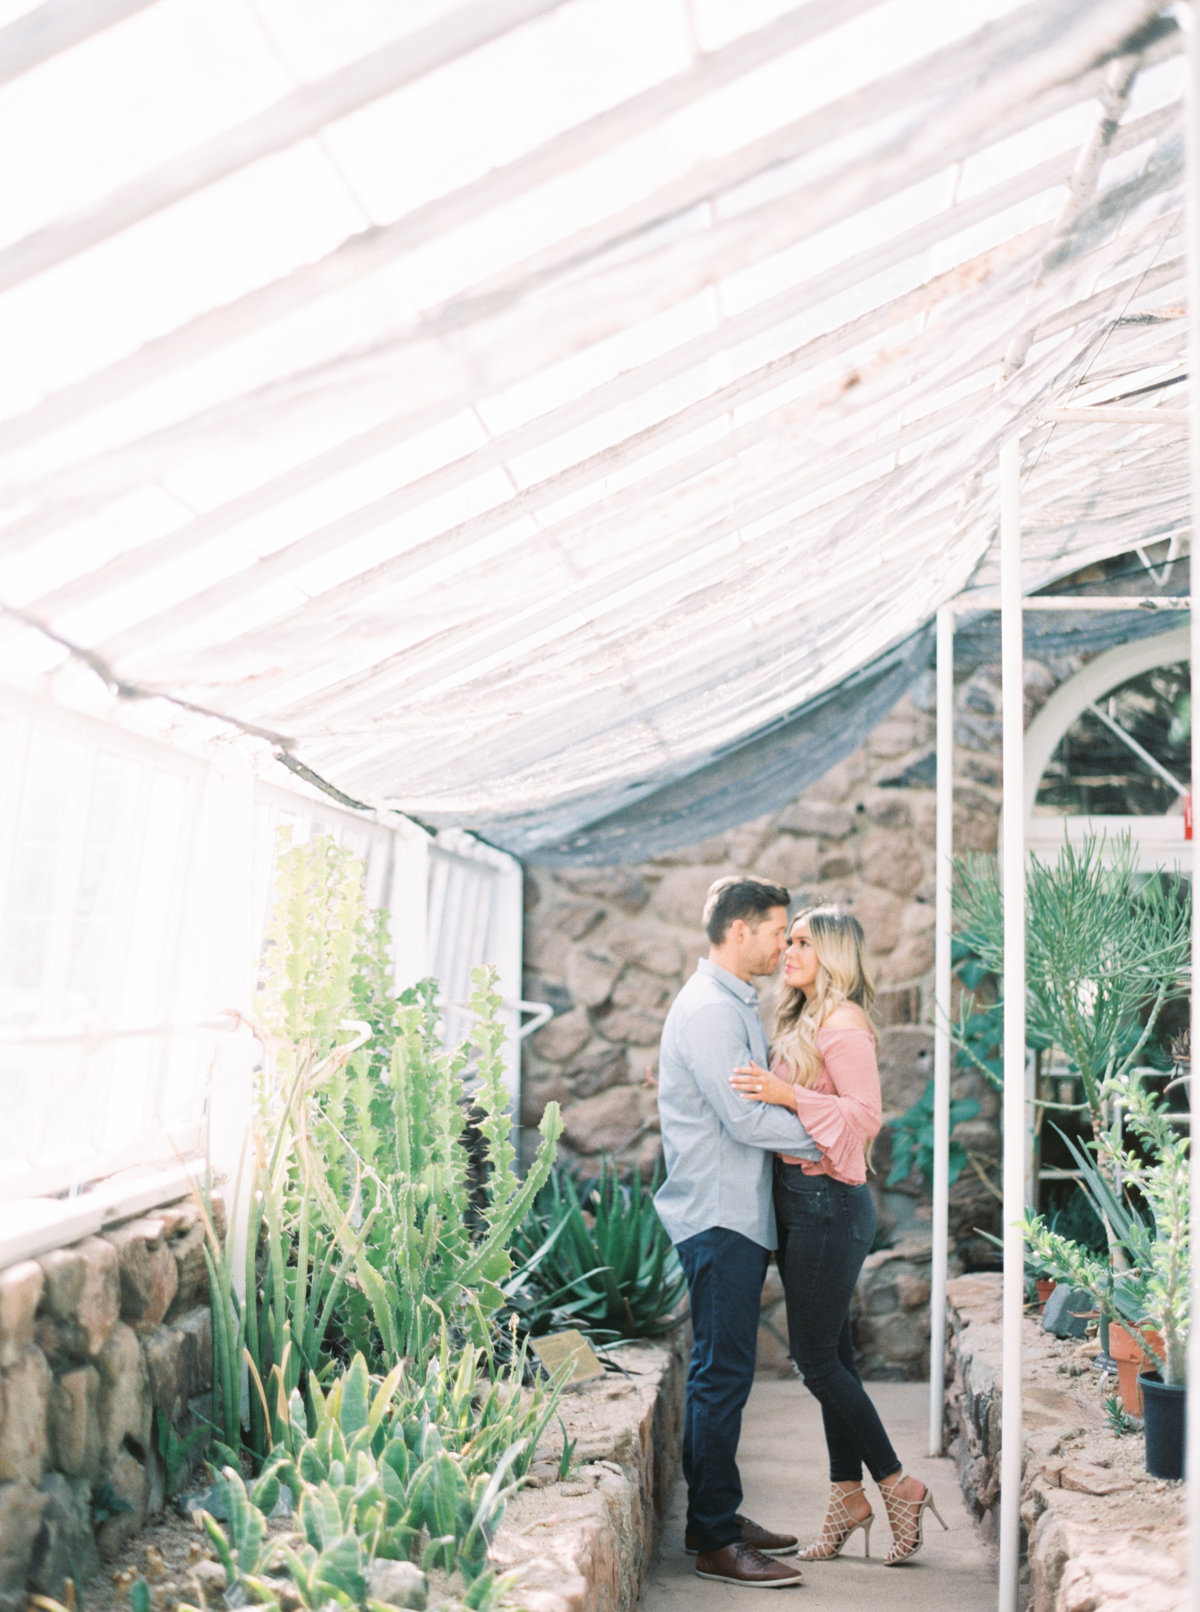 Vanessa & Kris | Engagement Session | Boyce Thompson Arboretum | Mary Claire Photography | Arizona & Destination Fine Art Wedding Photographer